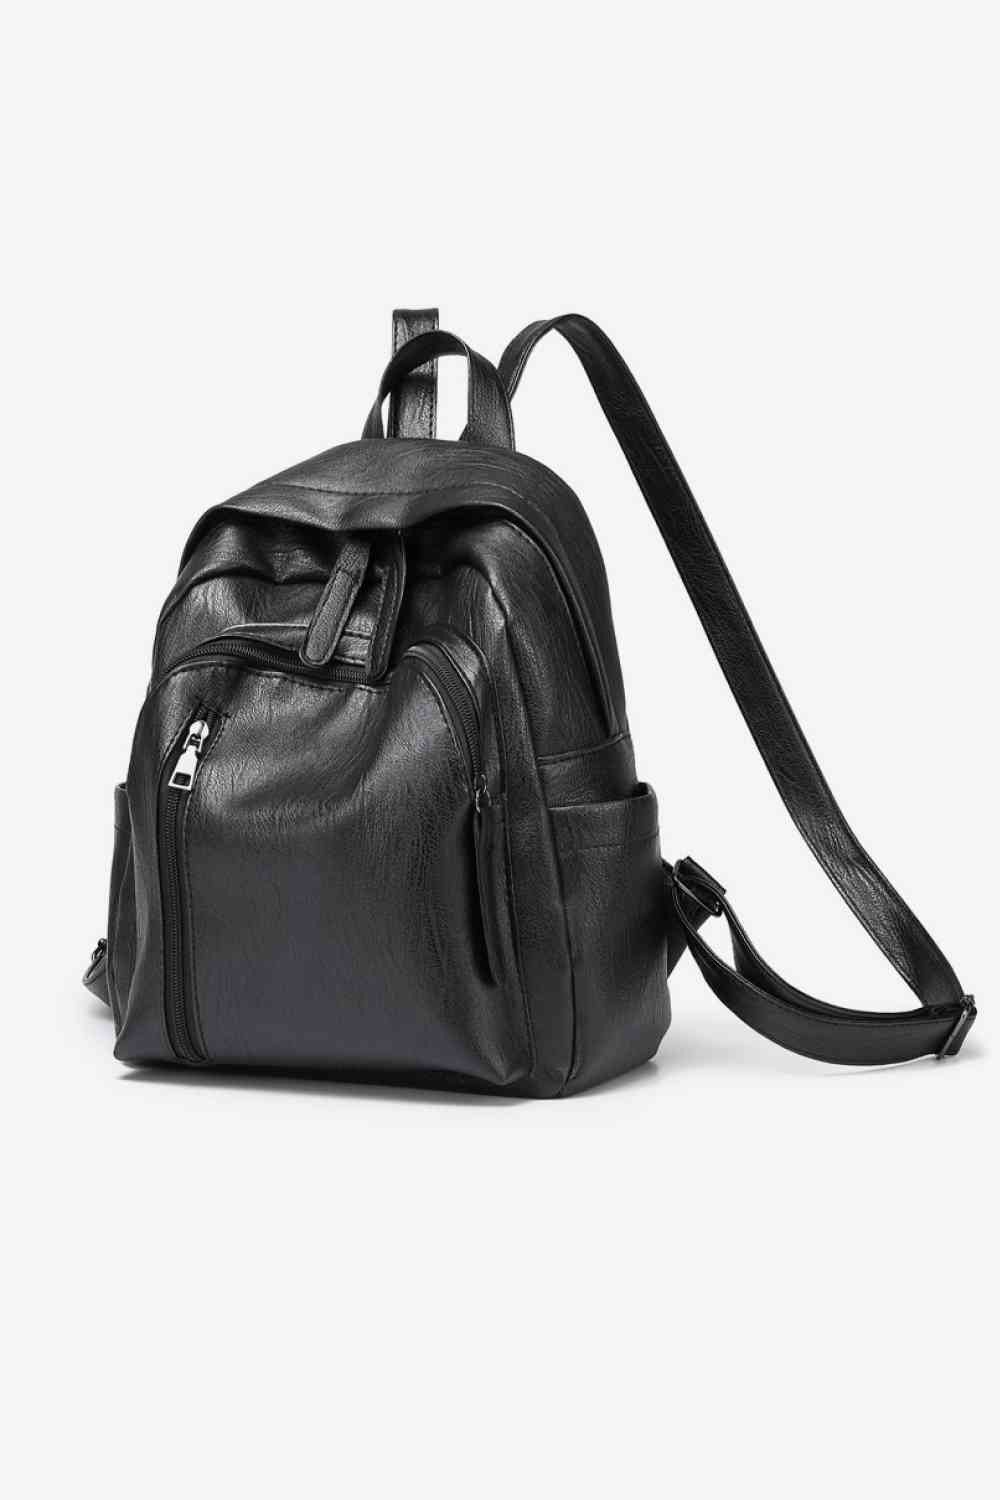 Adored PU Leather Backpack Backpacks Trendsi Black One Size 